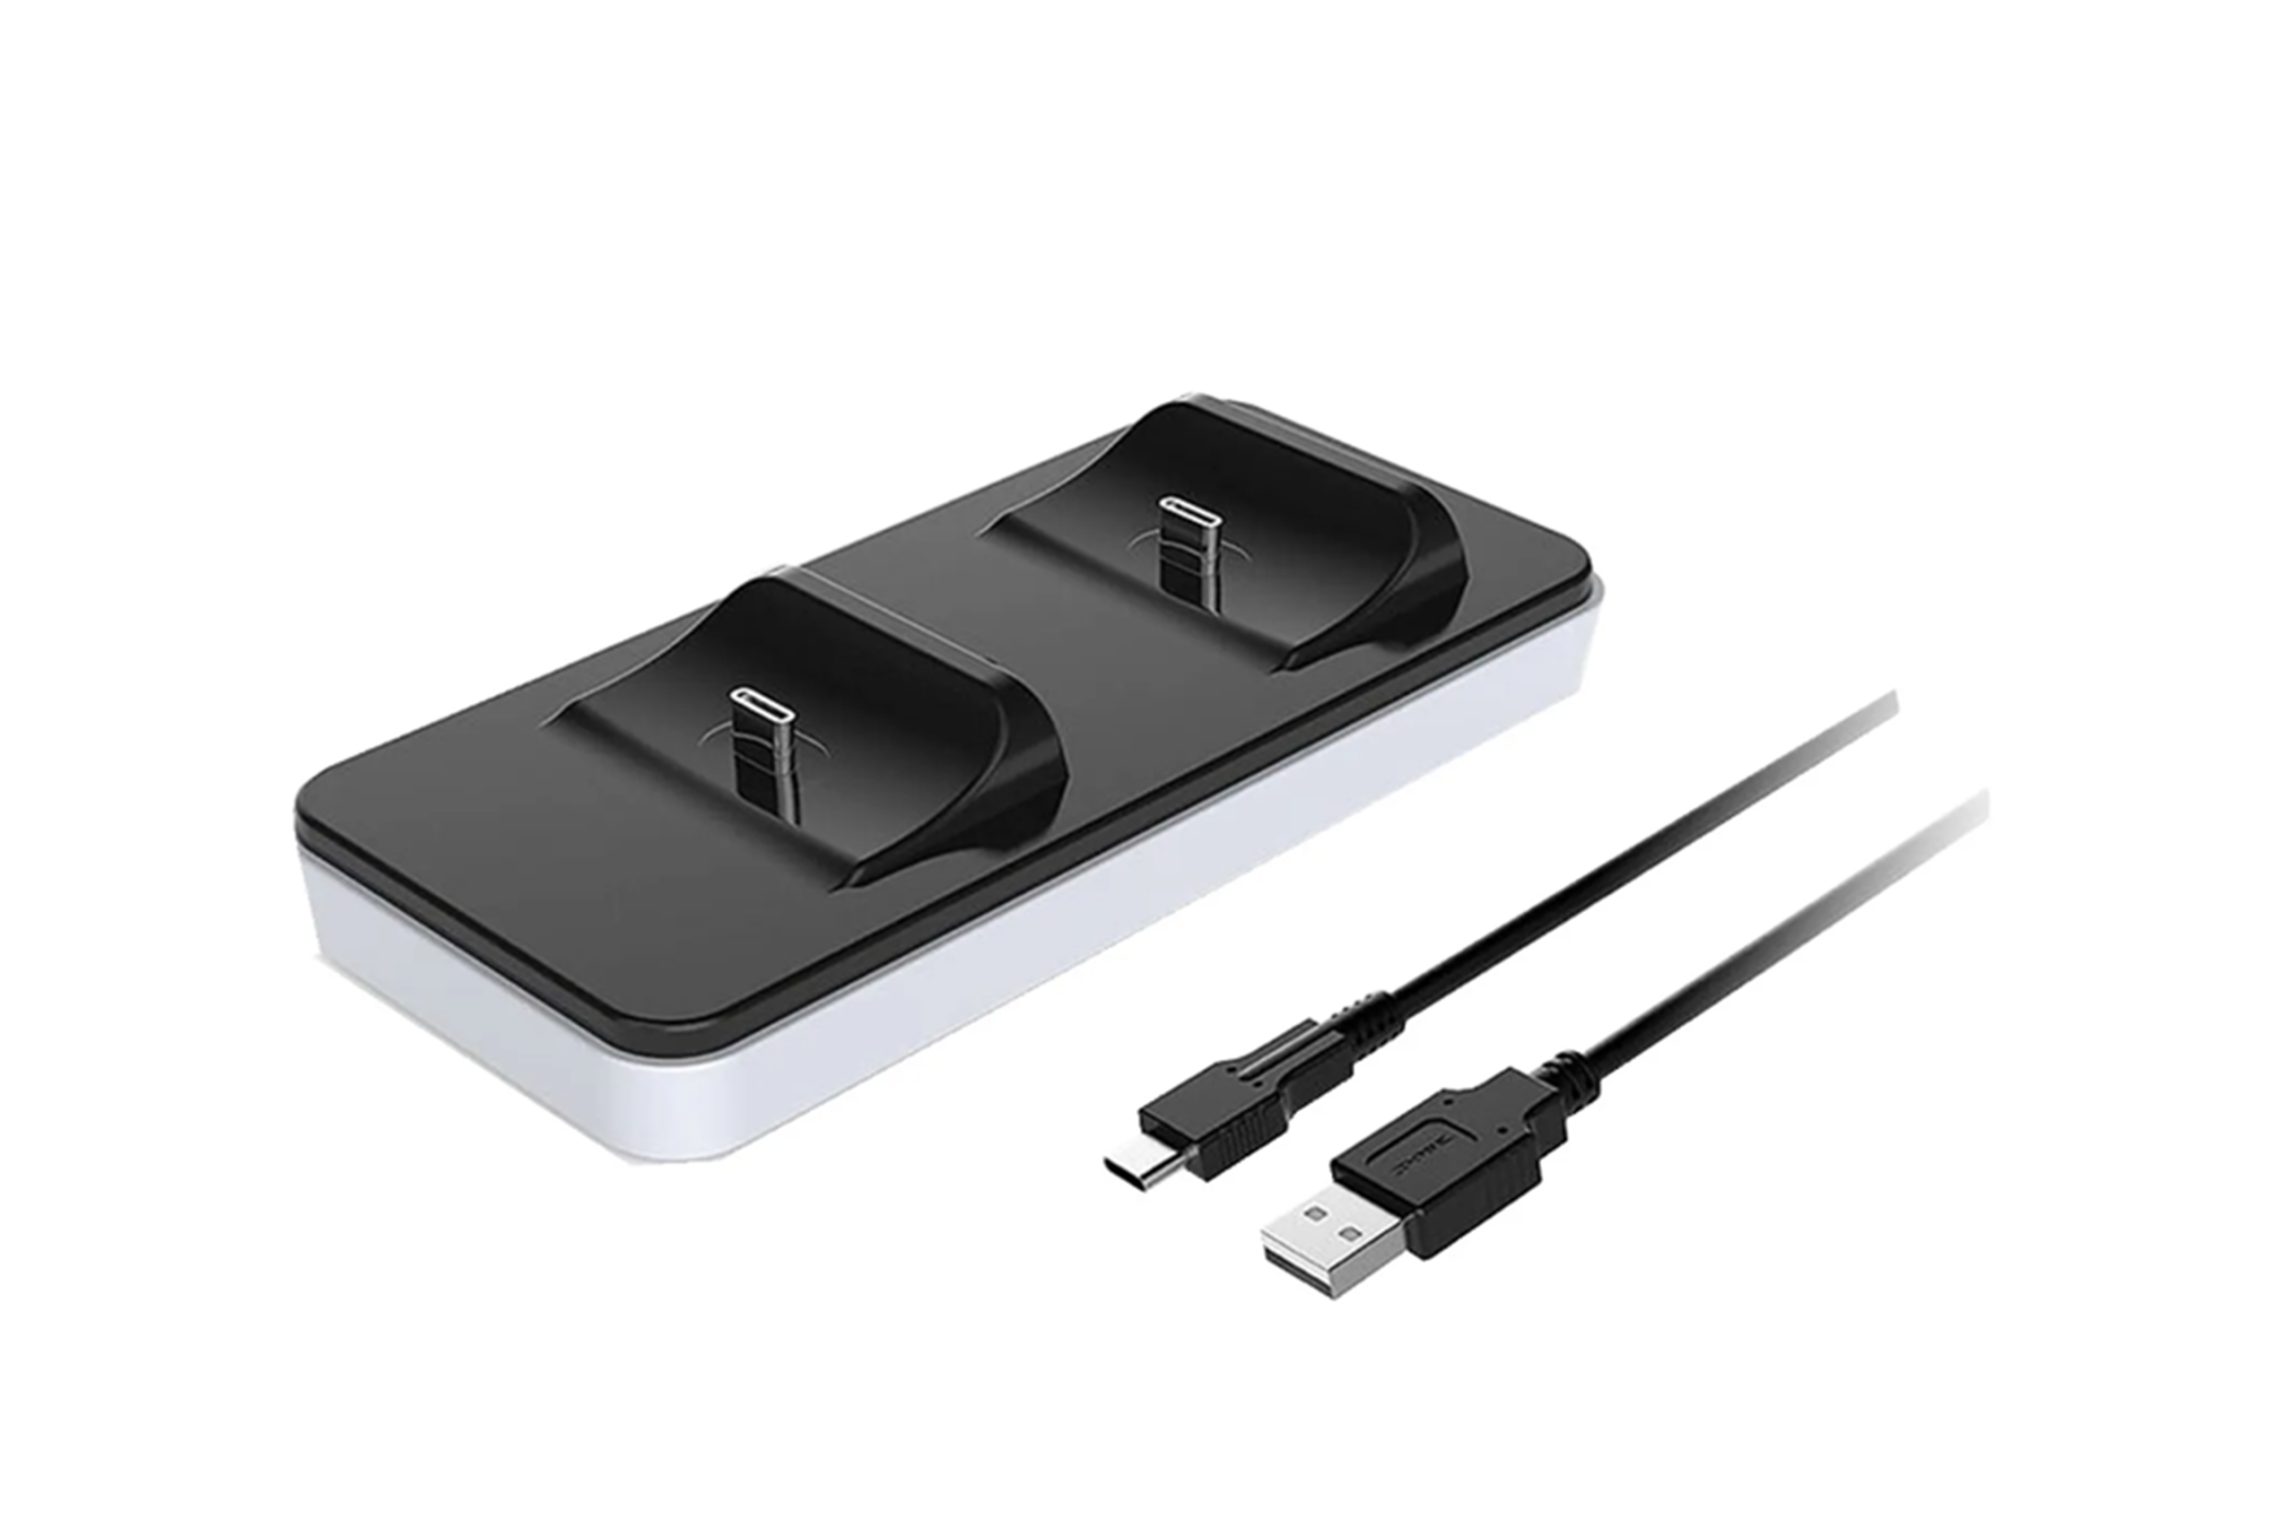 OIITH PS5 Ladestation 2 Controller USB-C schwarz/weiß USB-Ladegerät